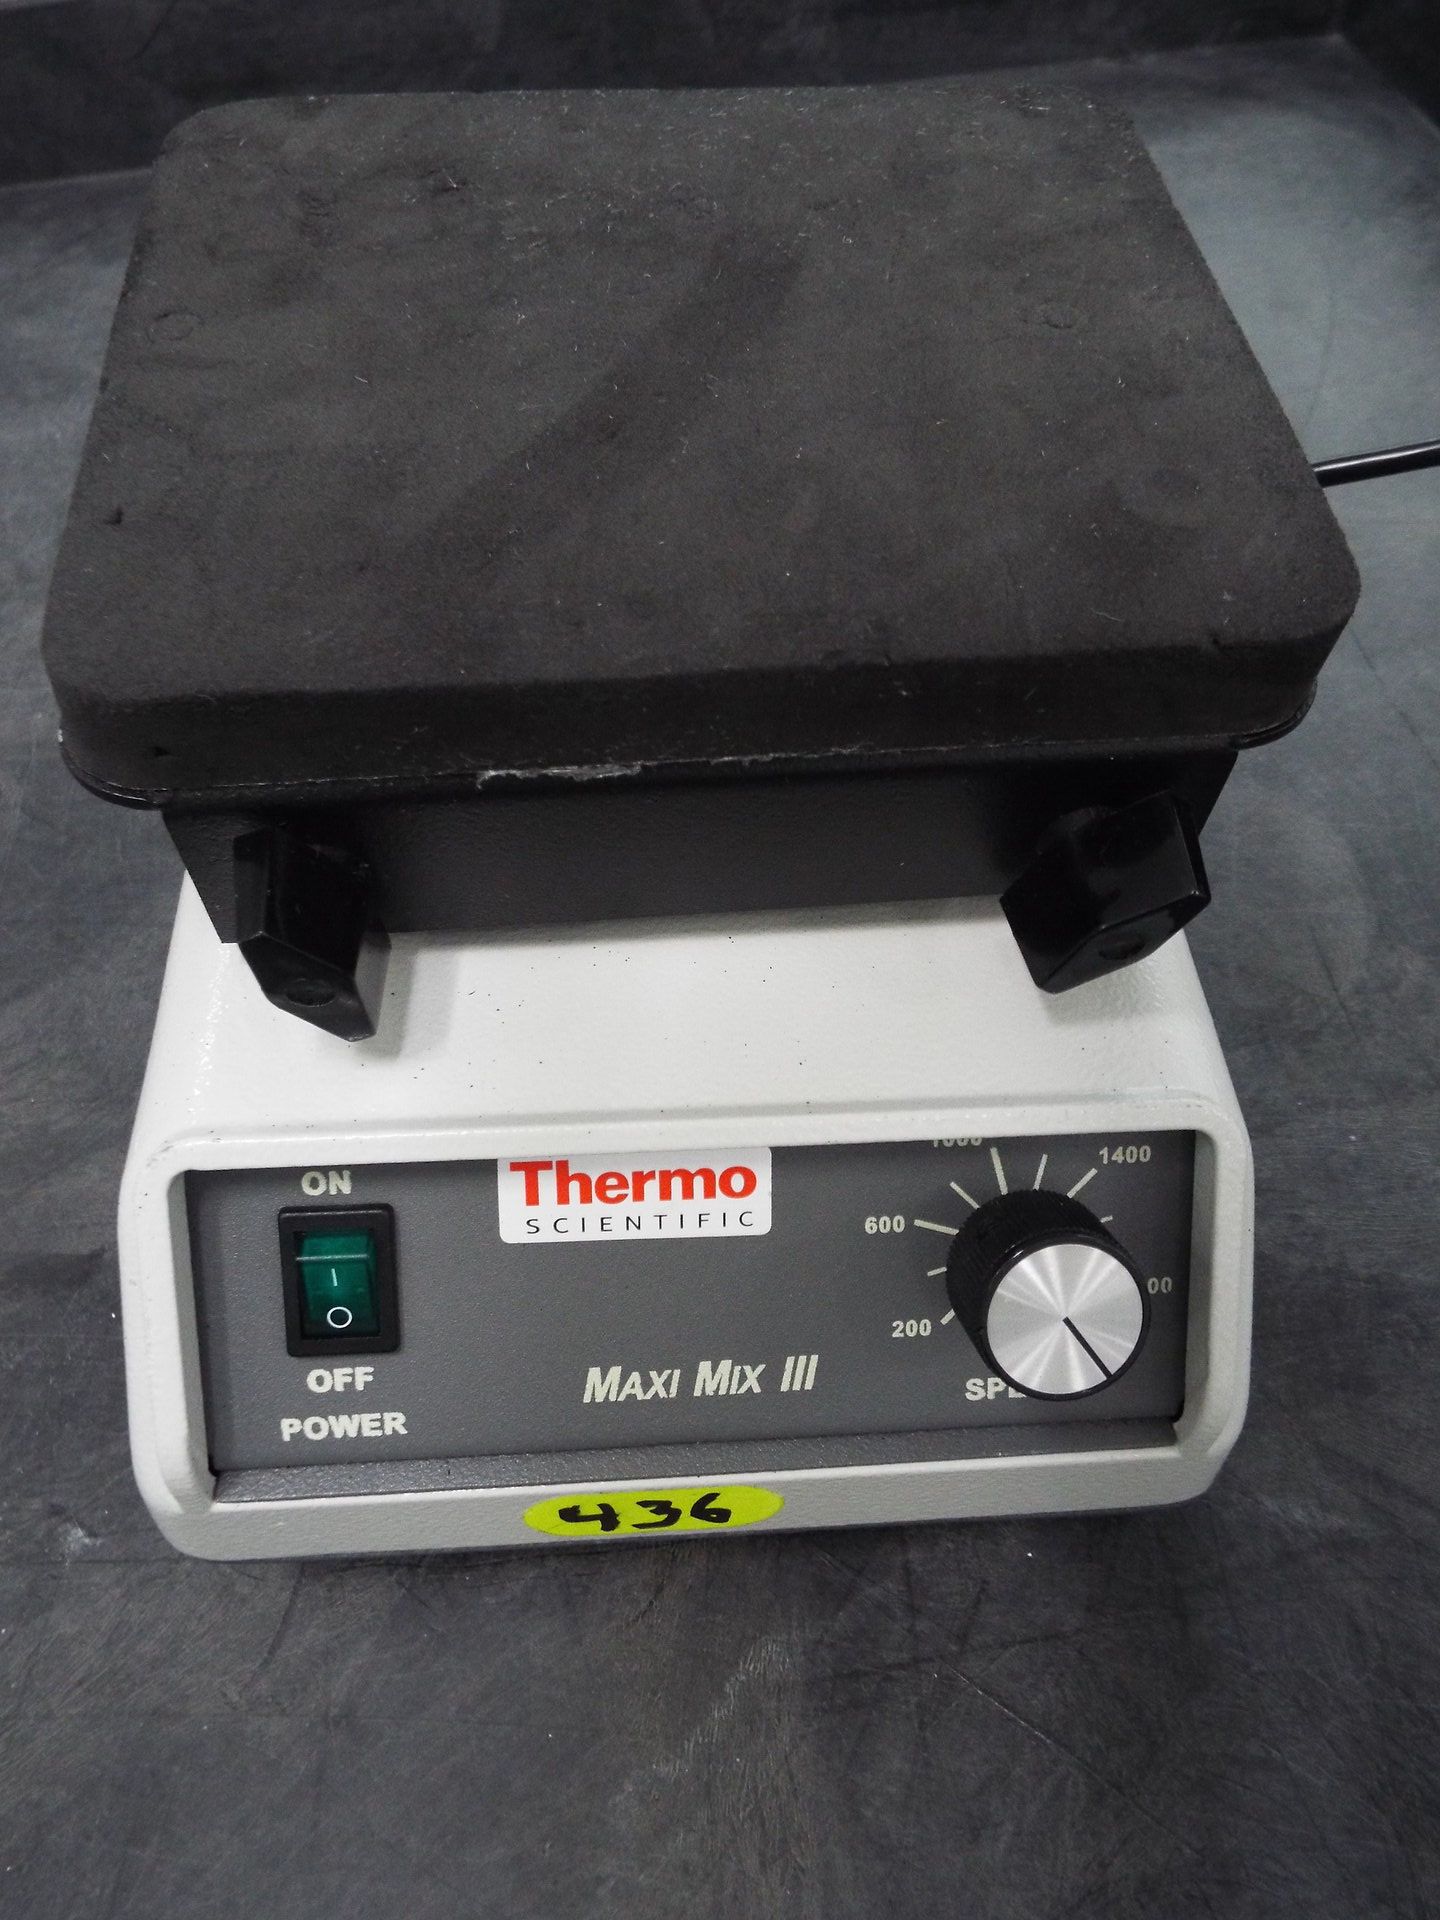 Thermo scientific MACI MIX III M65825 hot plate stirrer